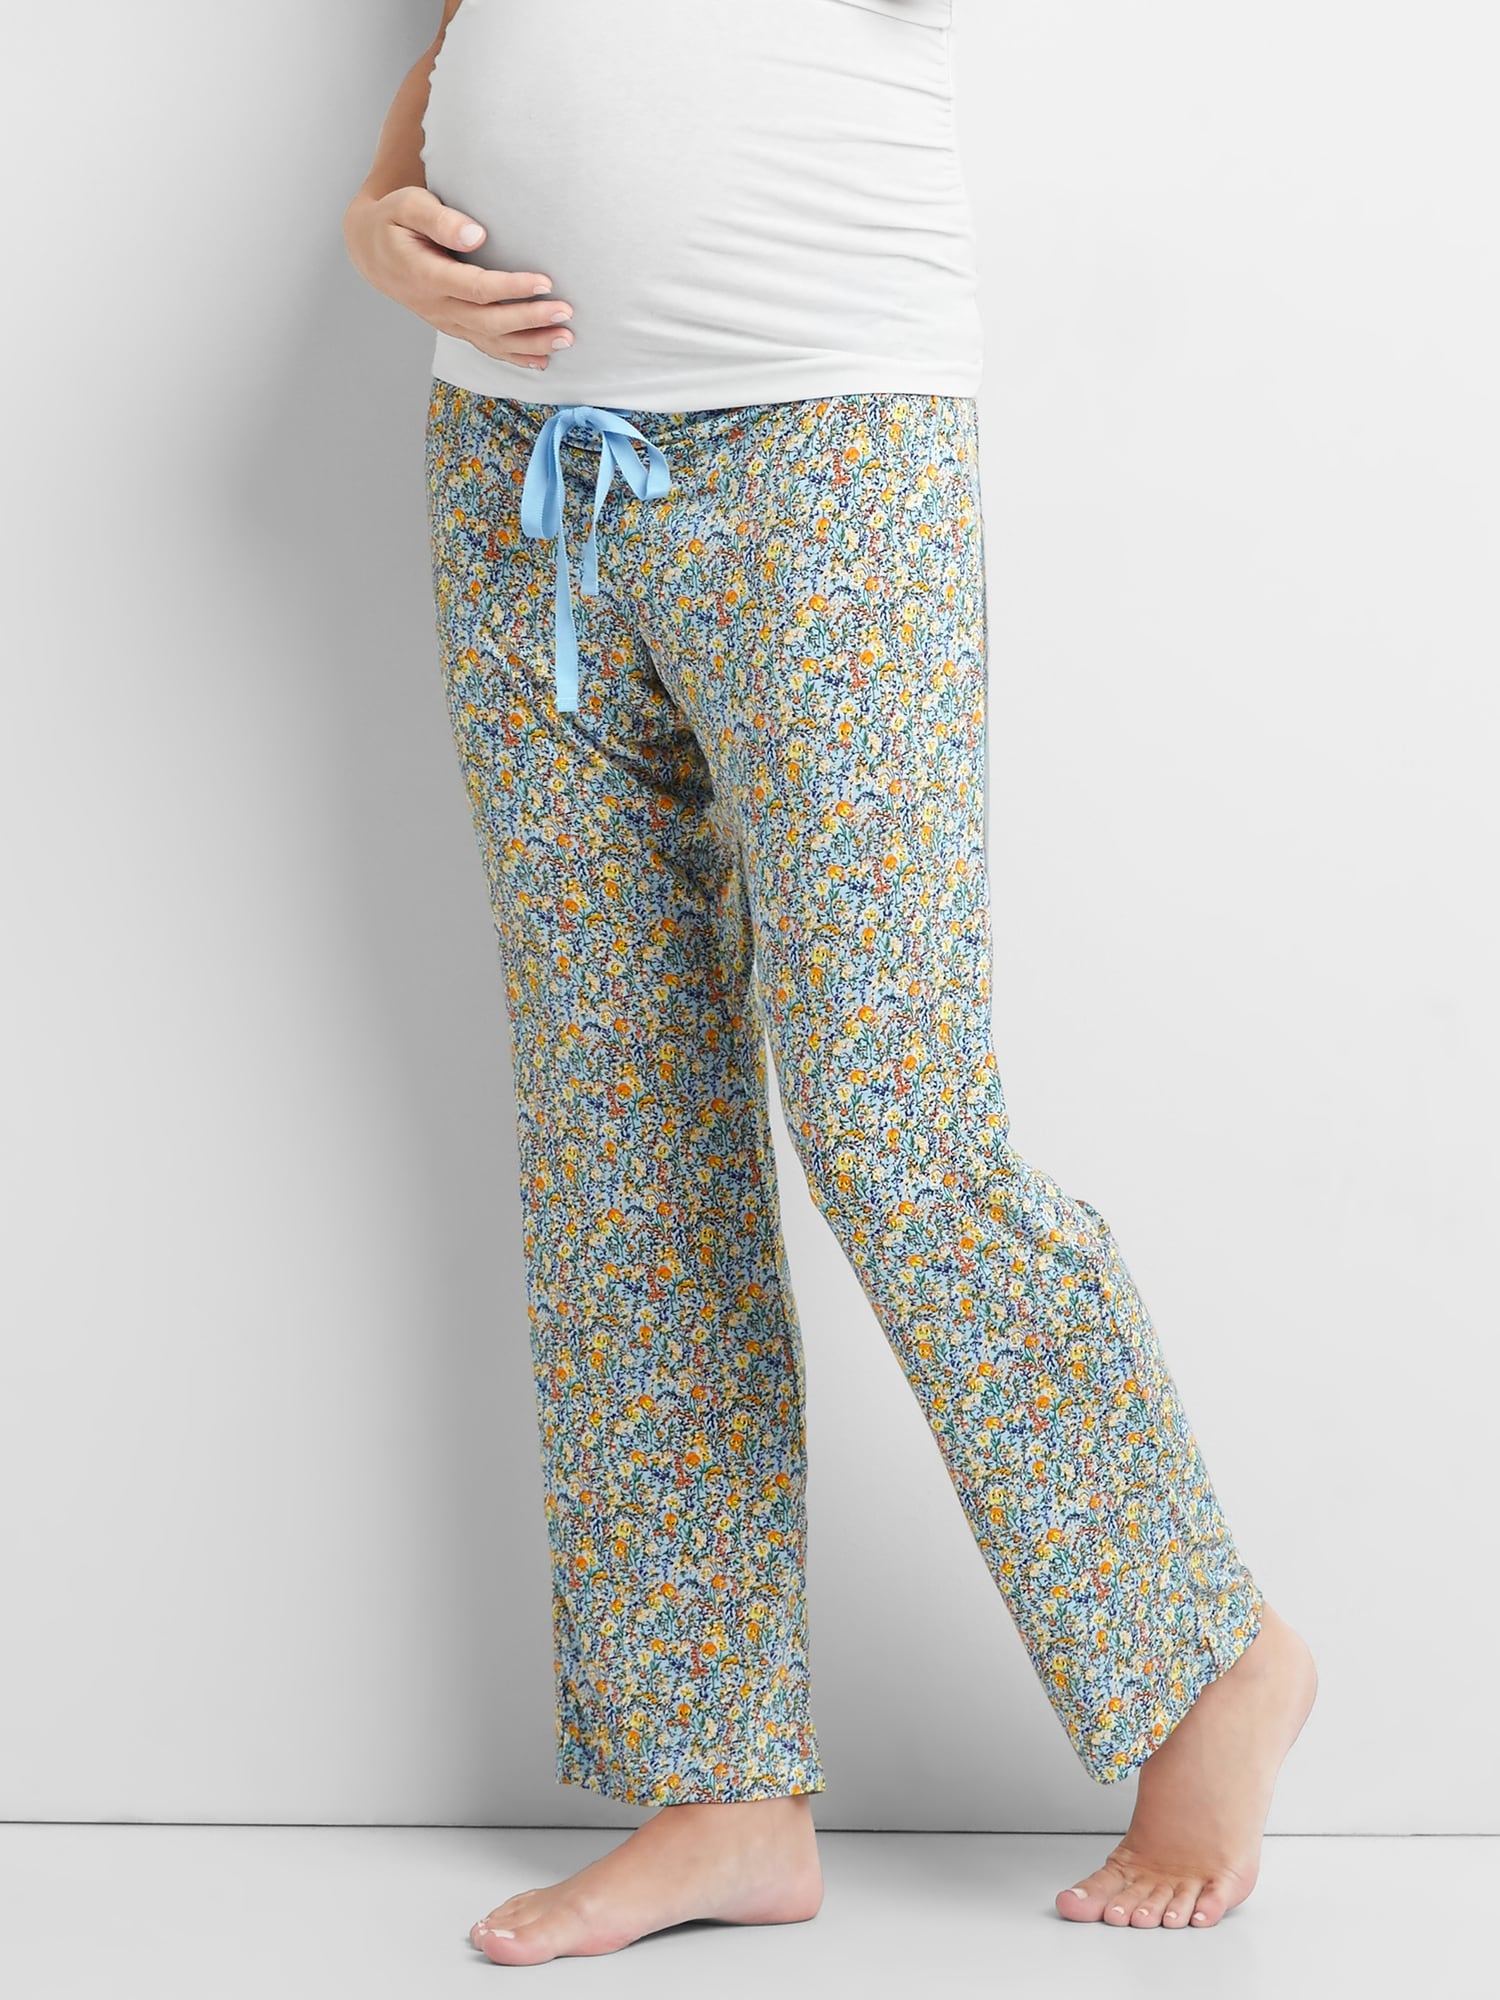 Modal Pajama Pants, The Gap Loungewear